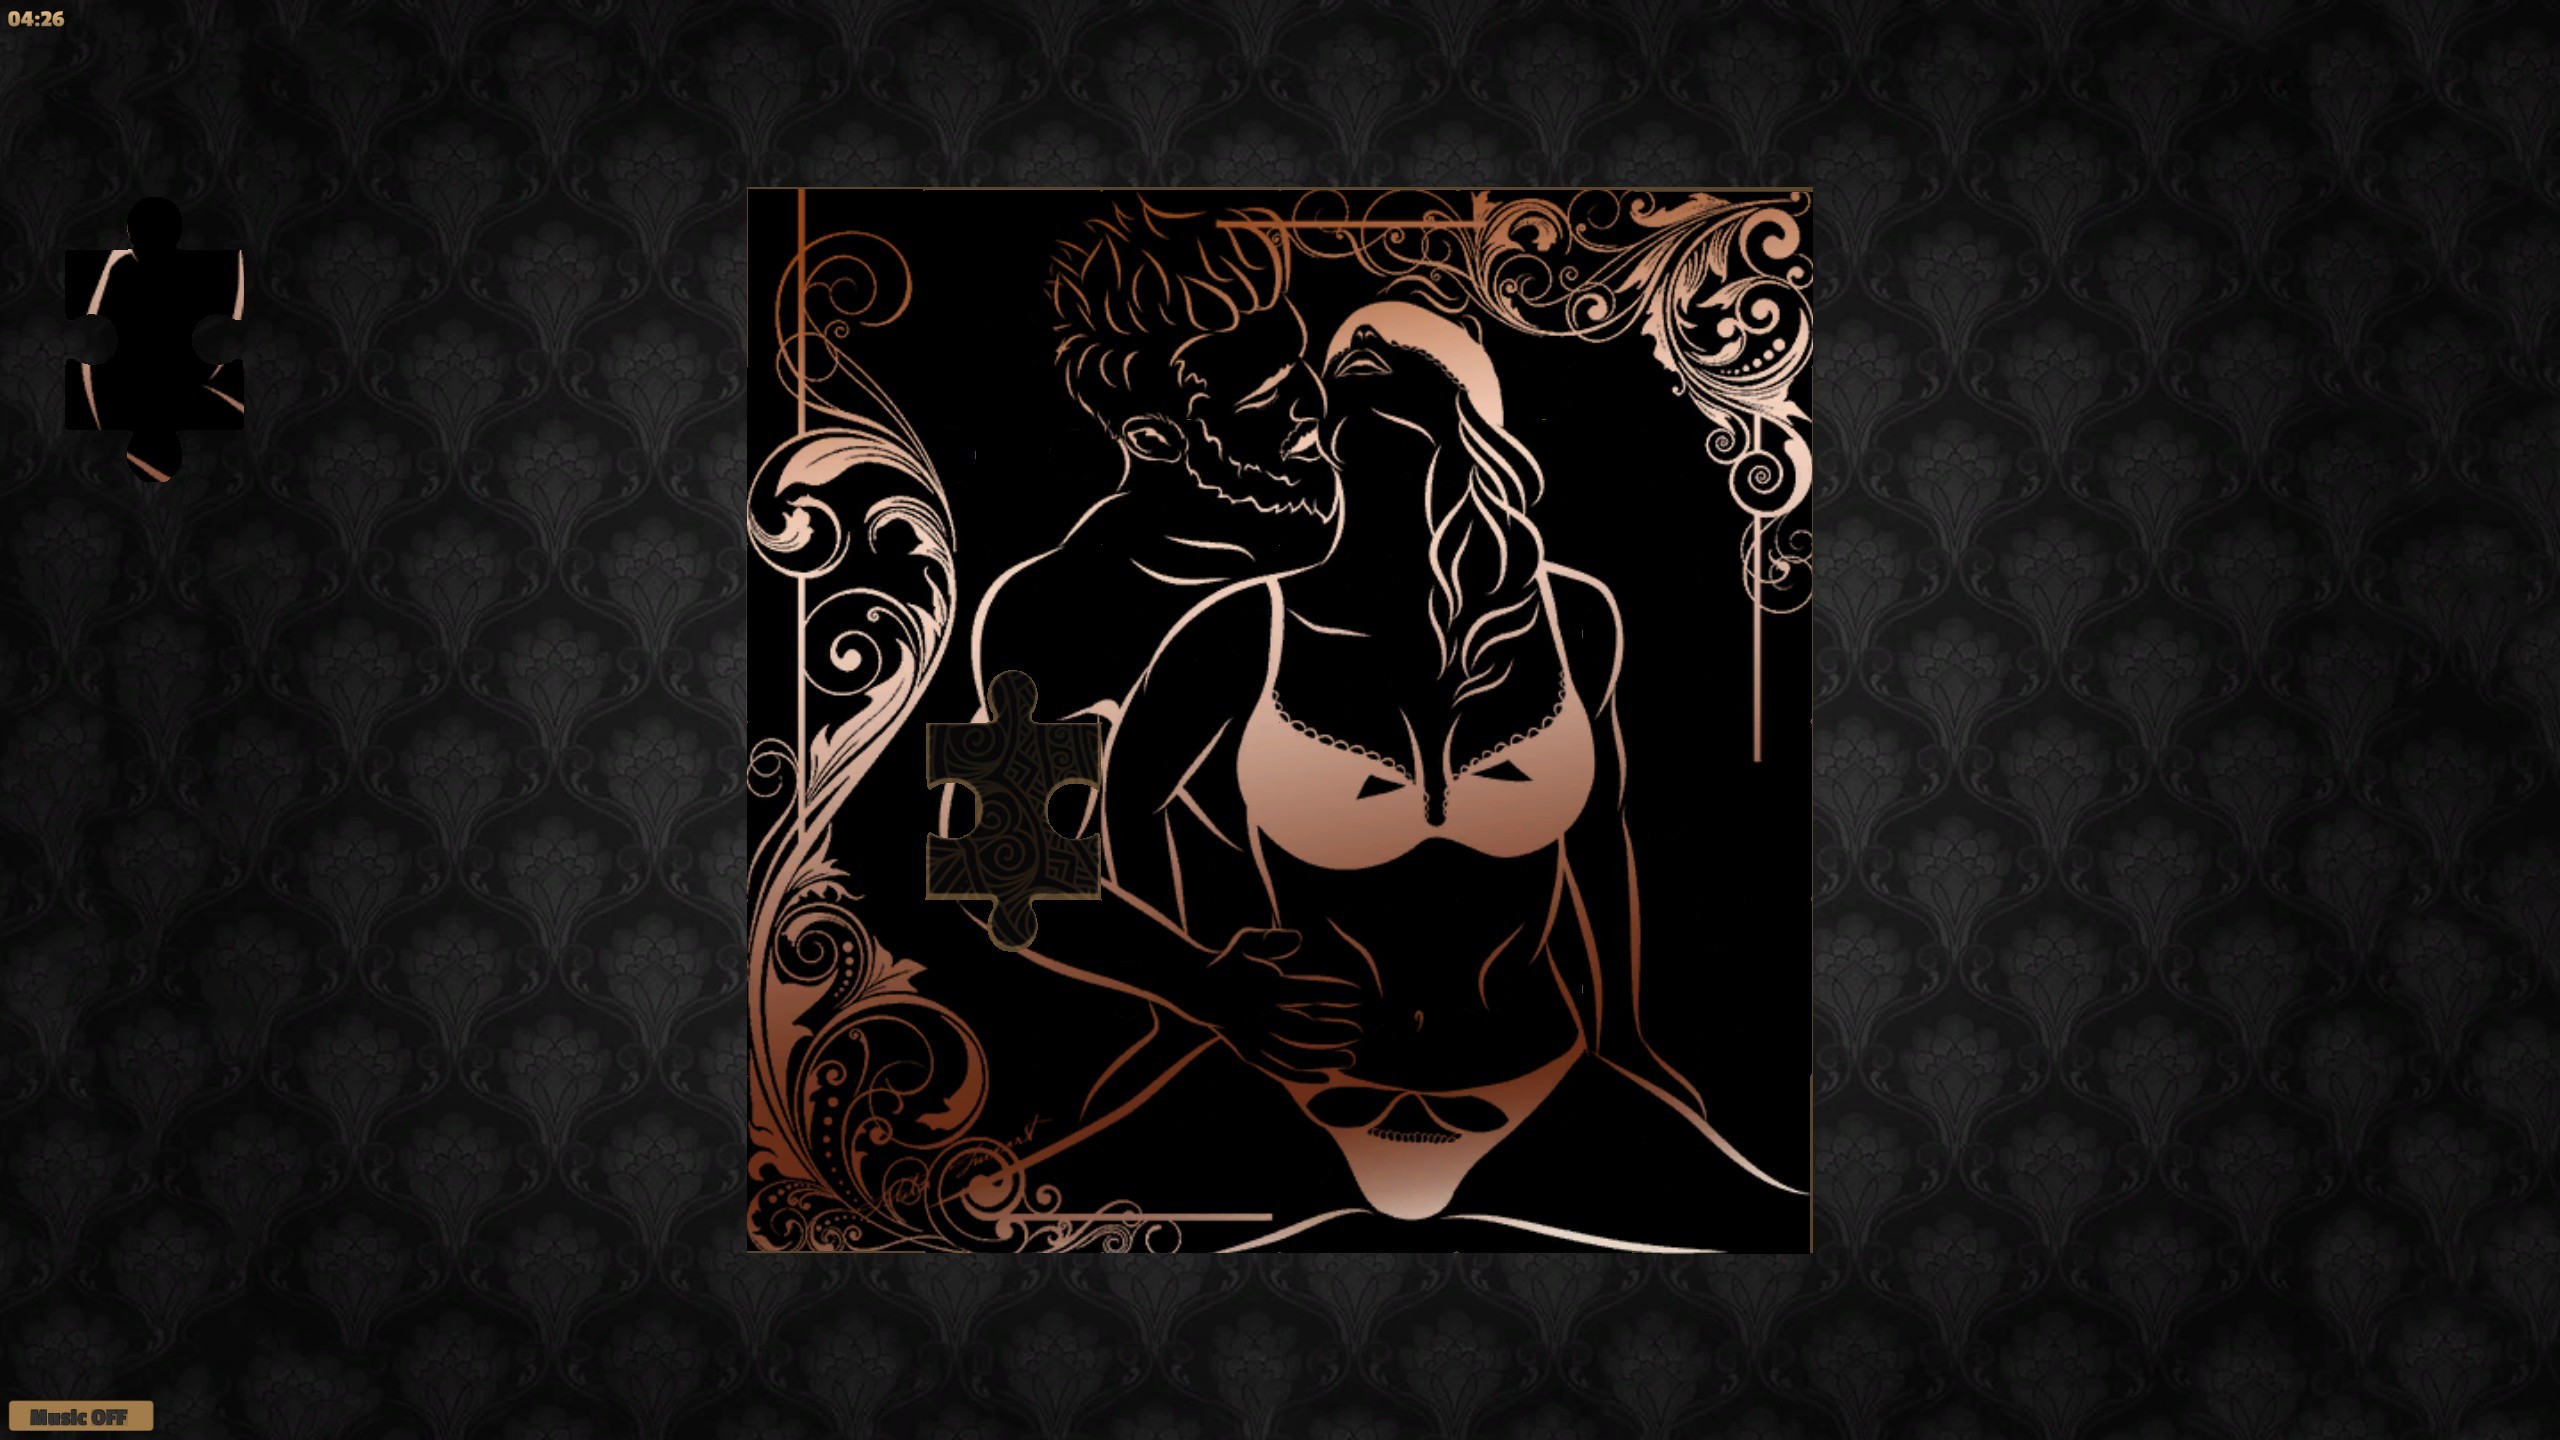 Erotic Jigsaw Puzzle + Artbook DLC Steam CD Key